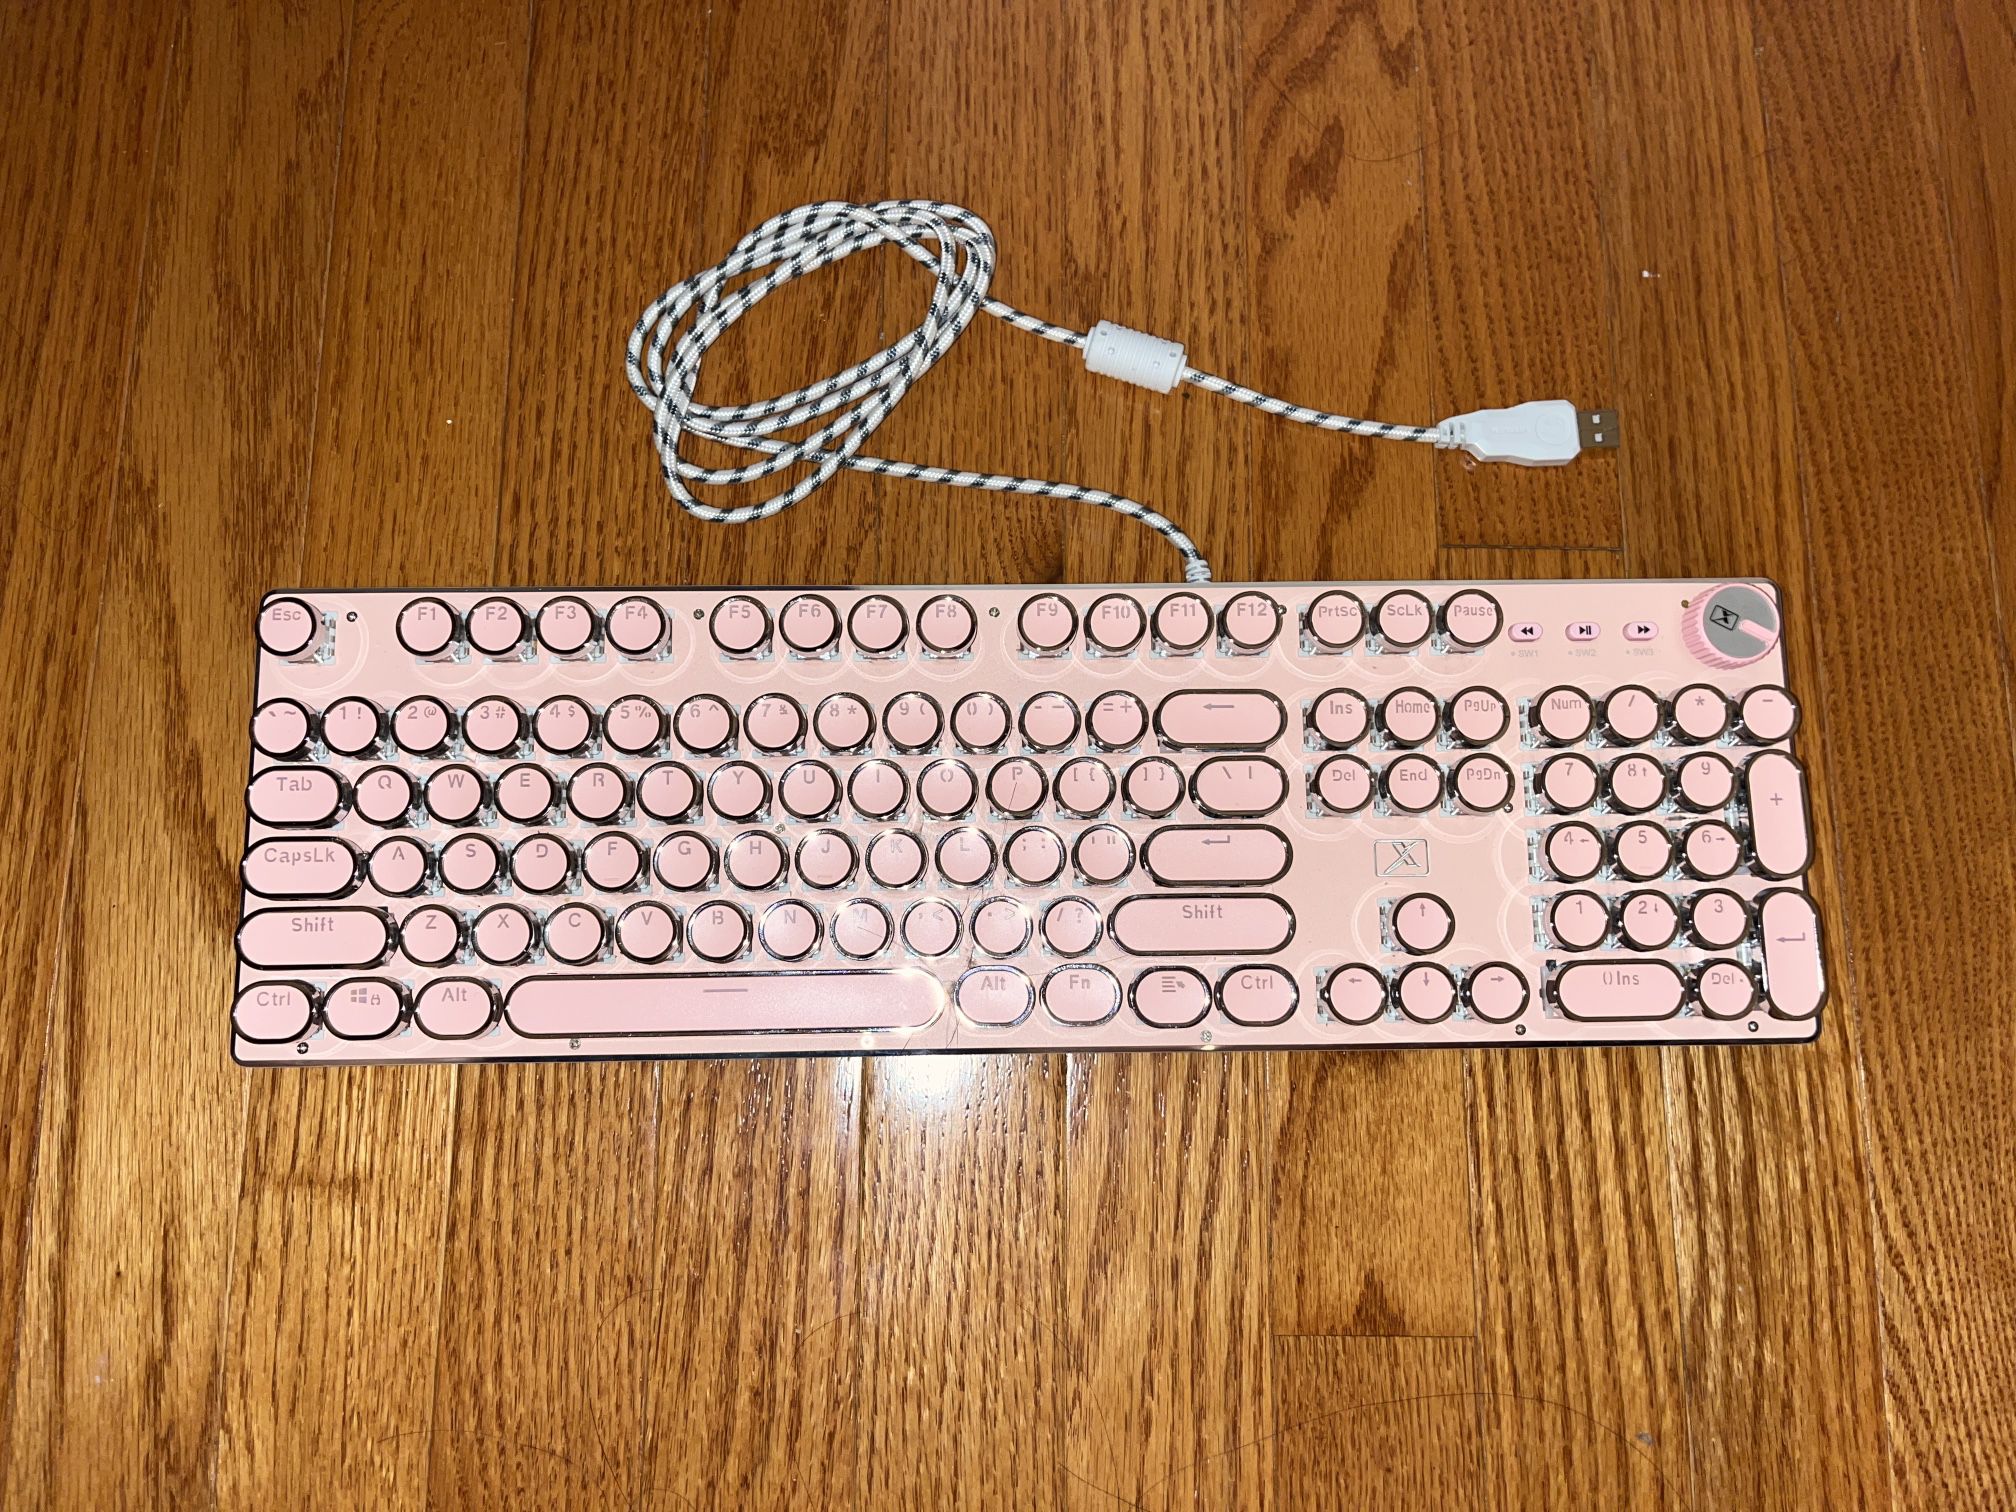 Wired Pink Mechanical Keyboard